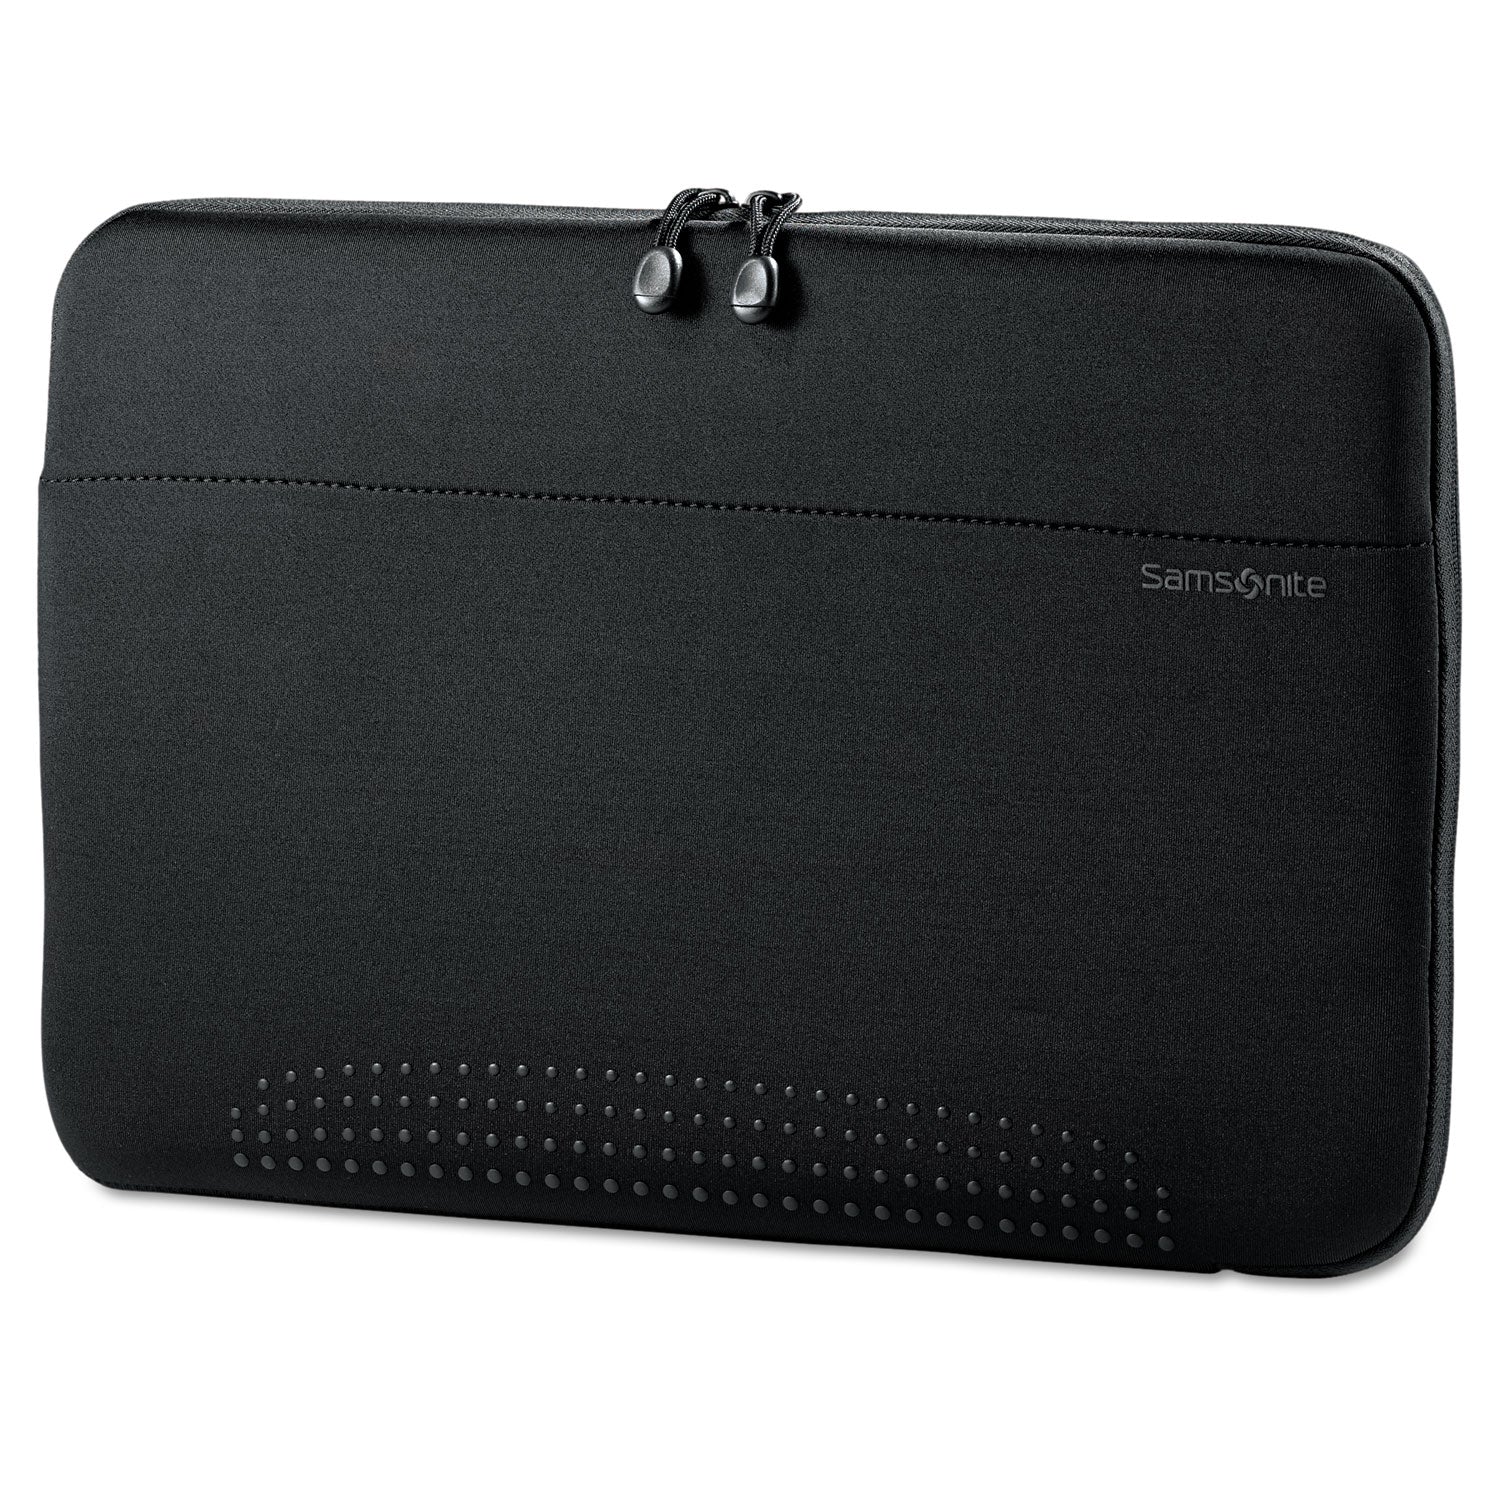 aramon-laptop-sleeve-fits-devices-up-to-156-neoprene-1575-x-1-x-105-black_sml433211041 - 1